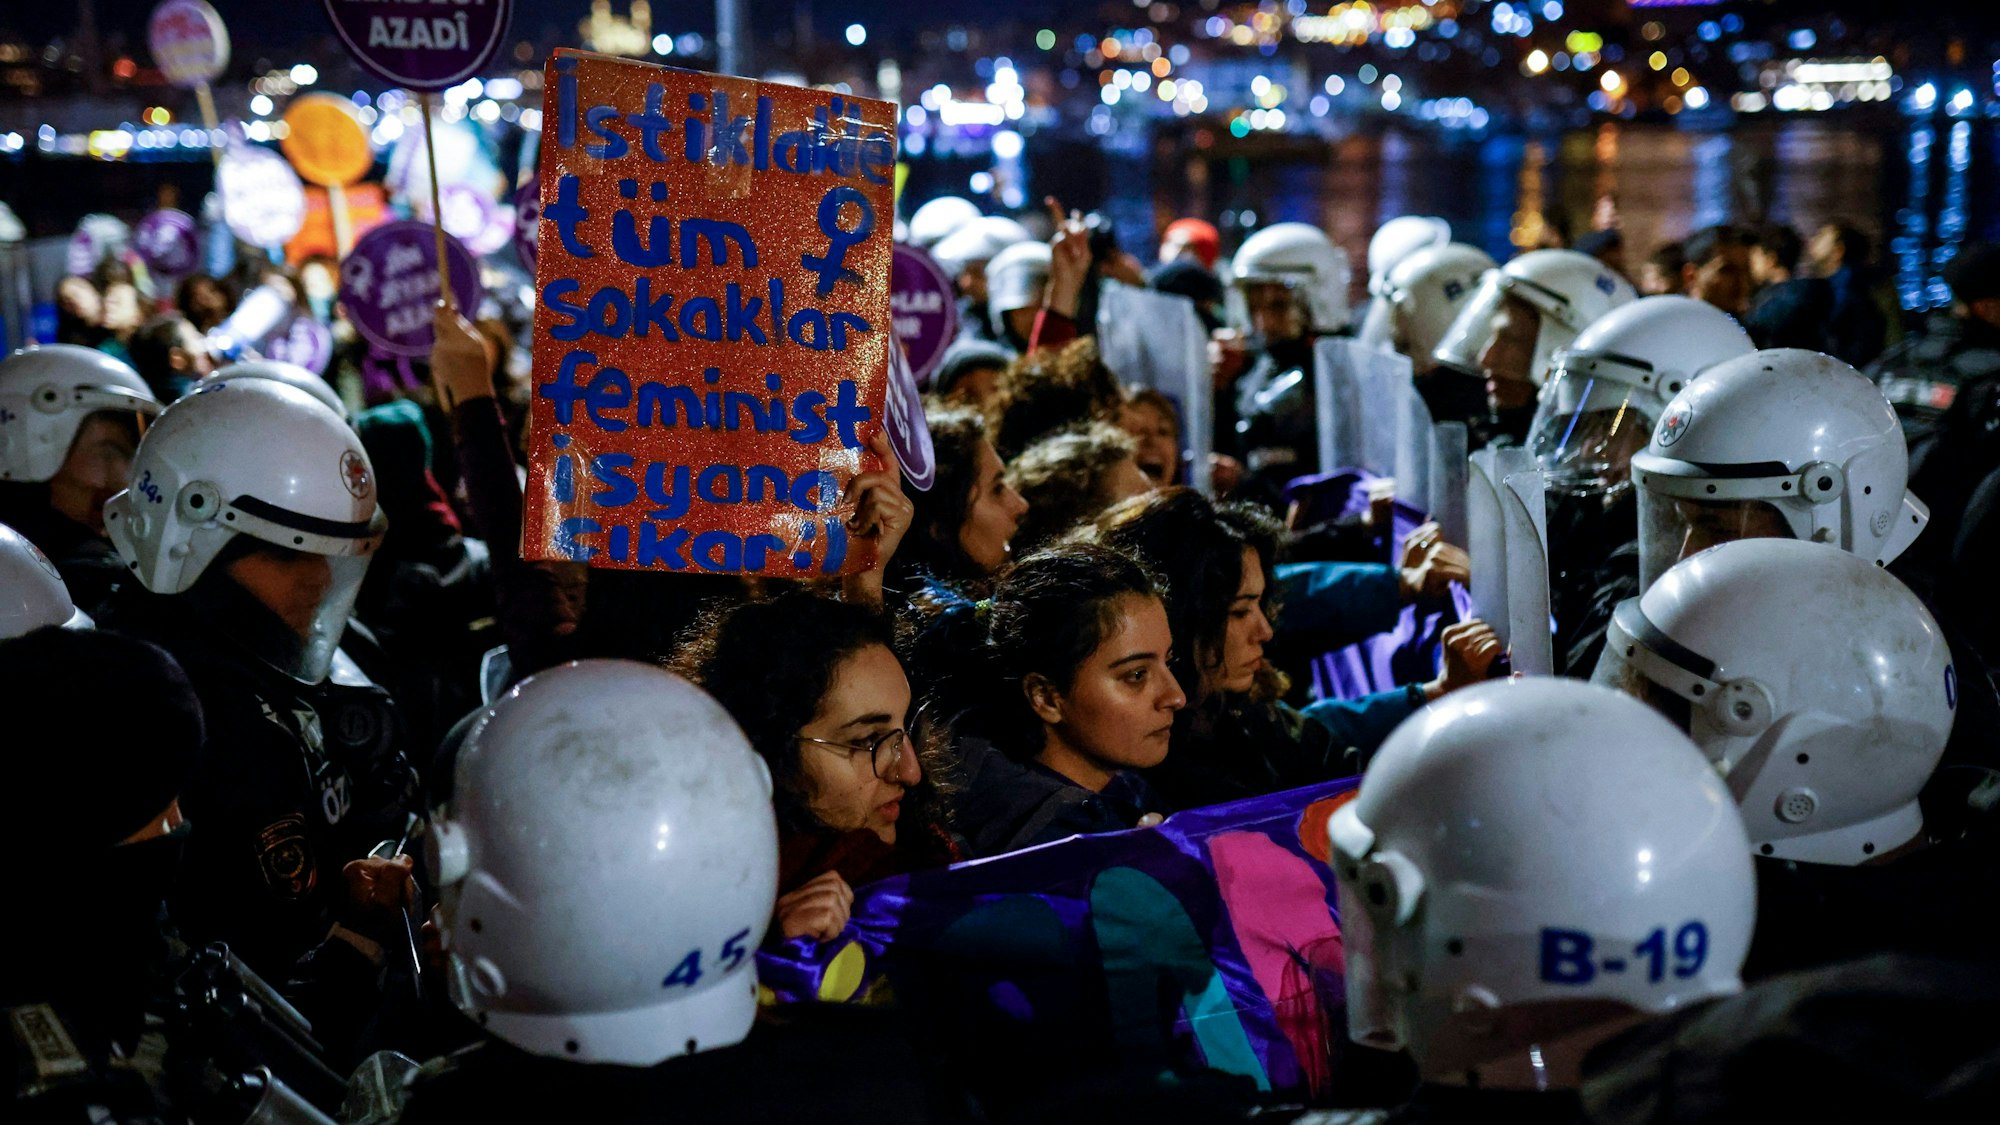 Türkische Polizei umringt weibliche Demonstranten in Istanbul. Die Demonstranten hatten gegen Gewalt gegen Frauen protestiert.